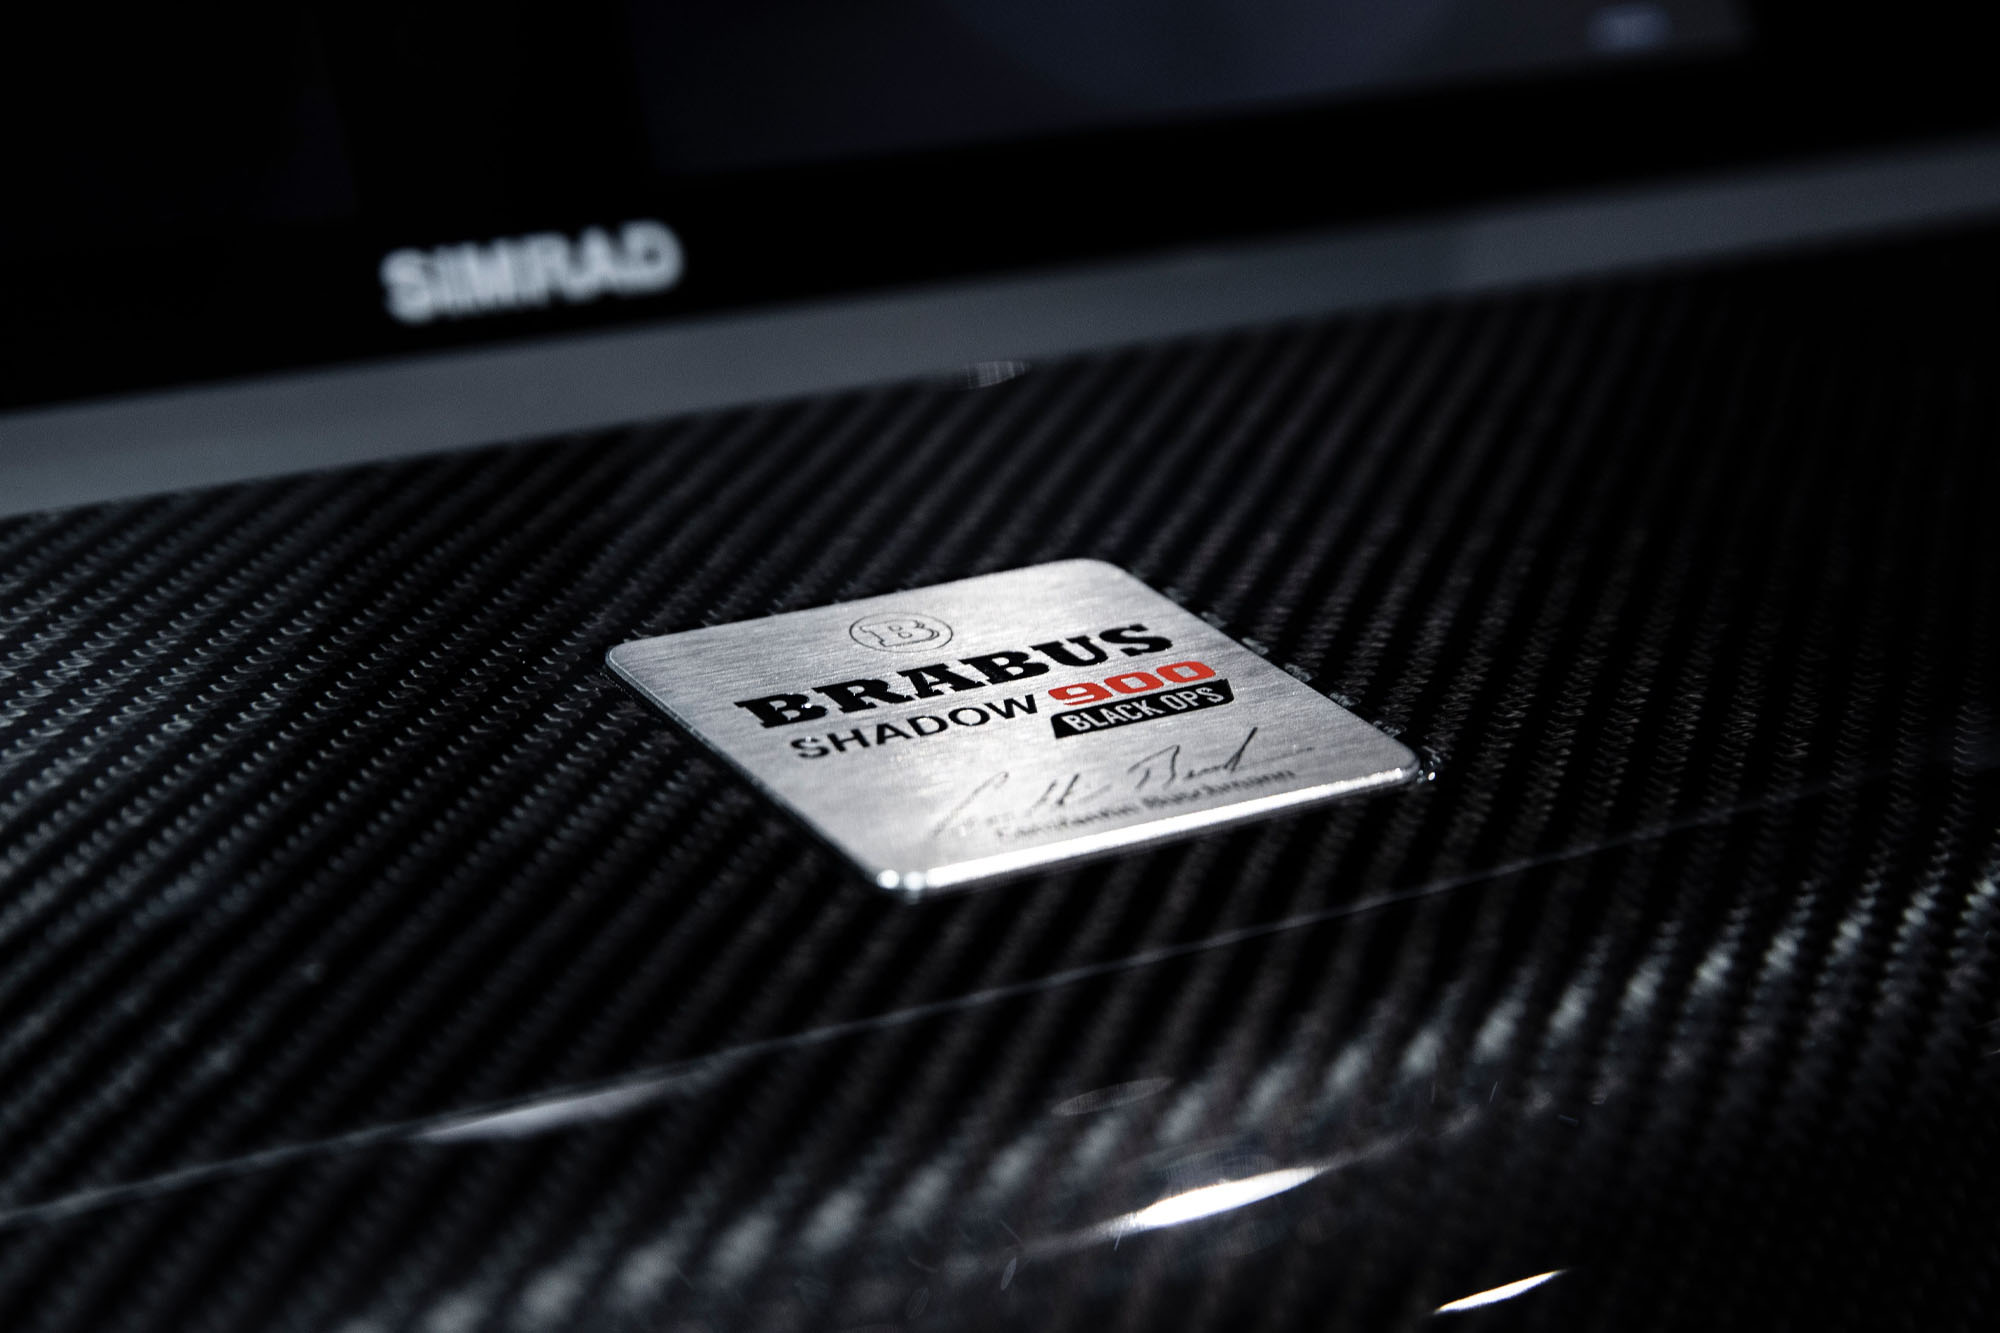 Brabus Shadow 900 XC Limited Edition